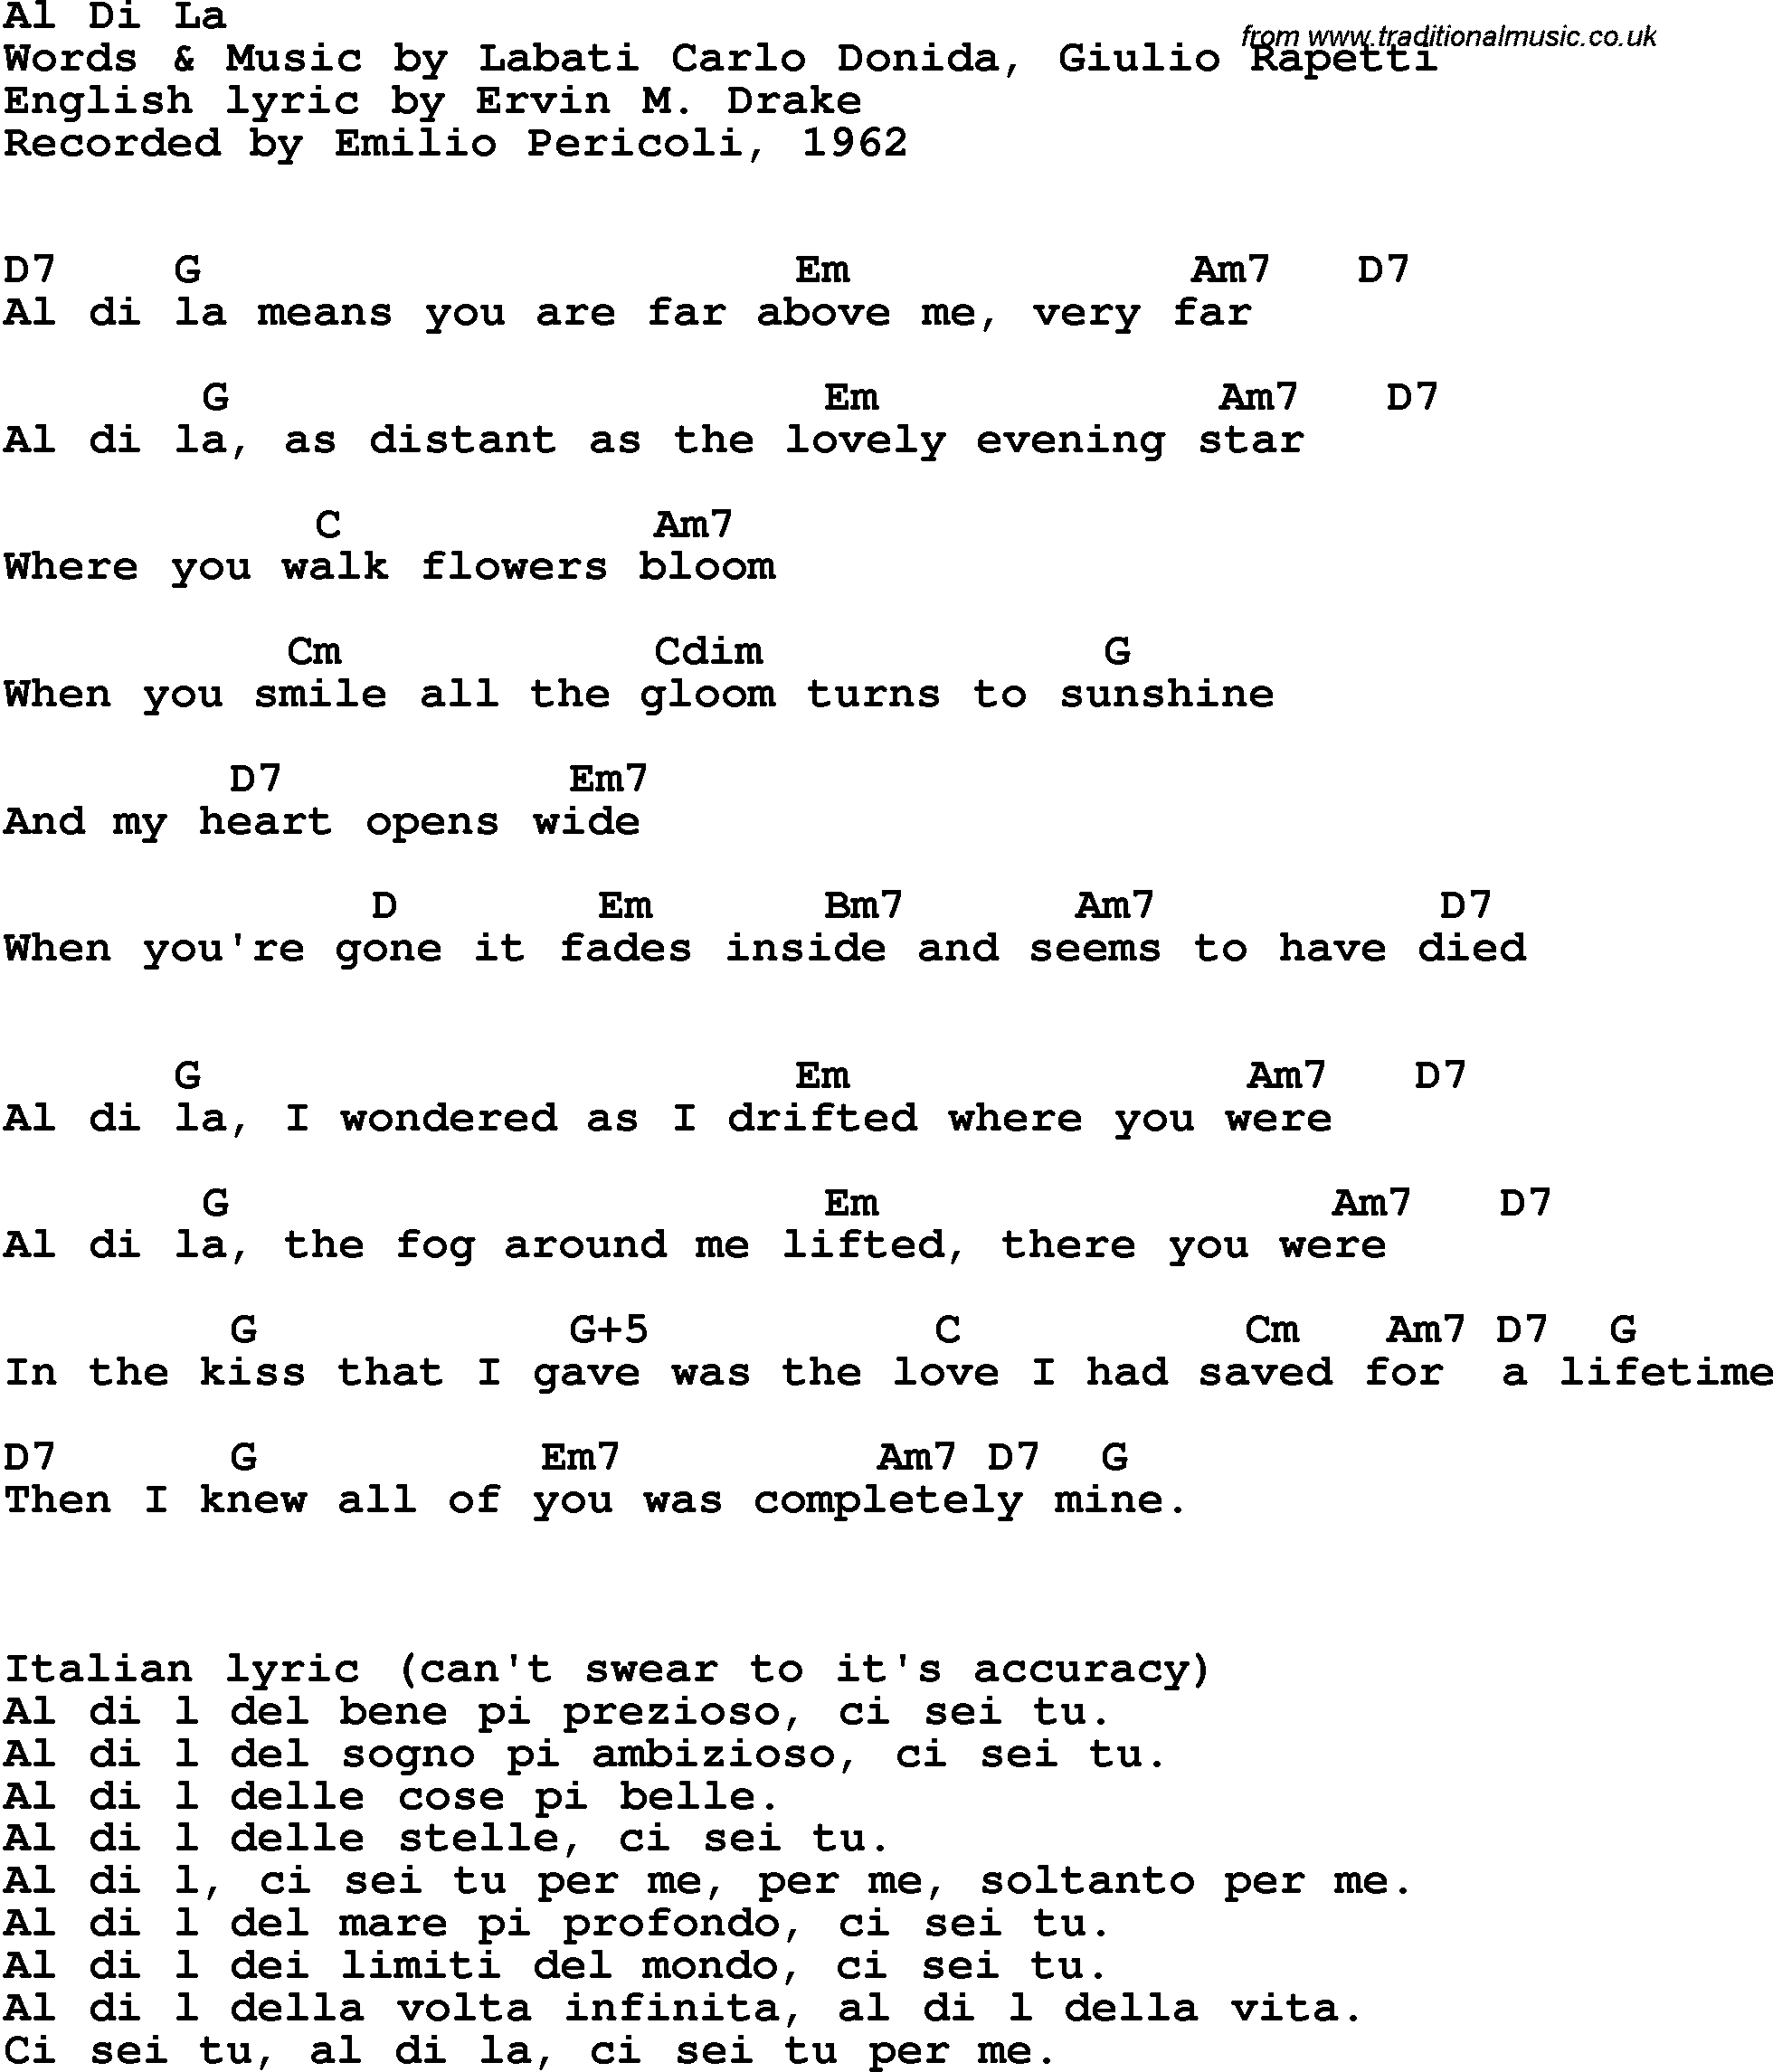 Song Lyrics with guitar chords for Al-di-la - Emilio Pericoli, 1962